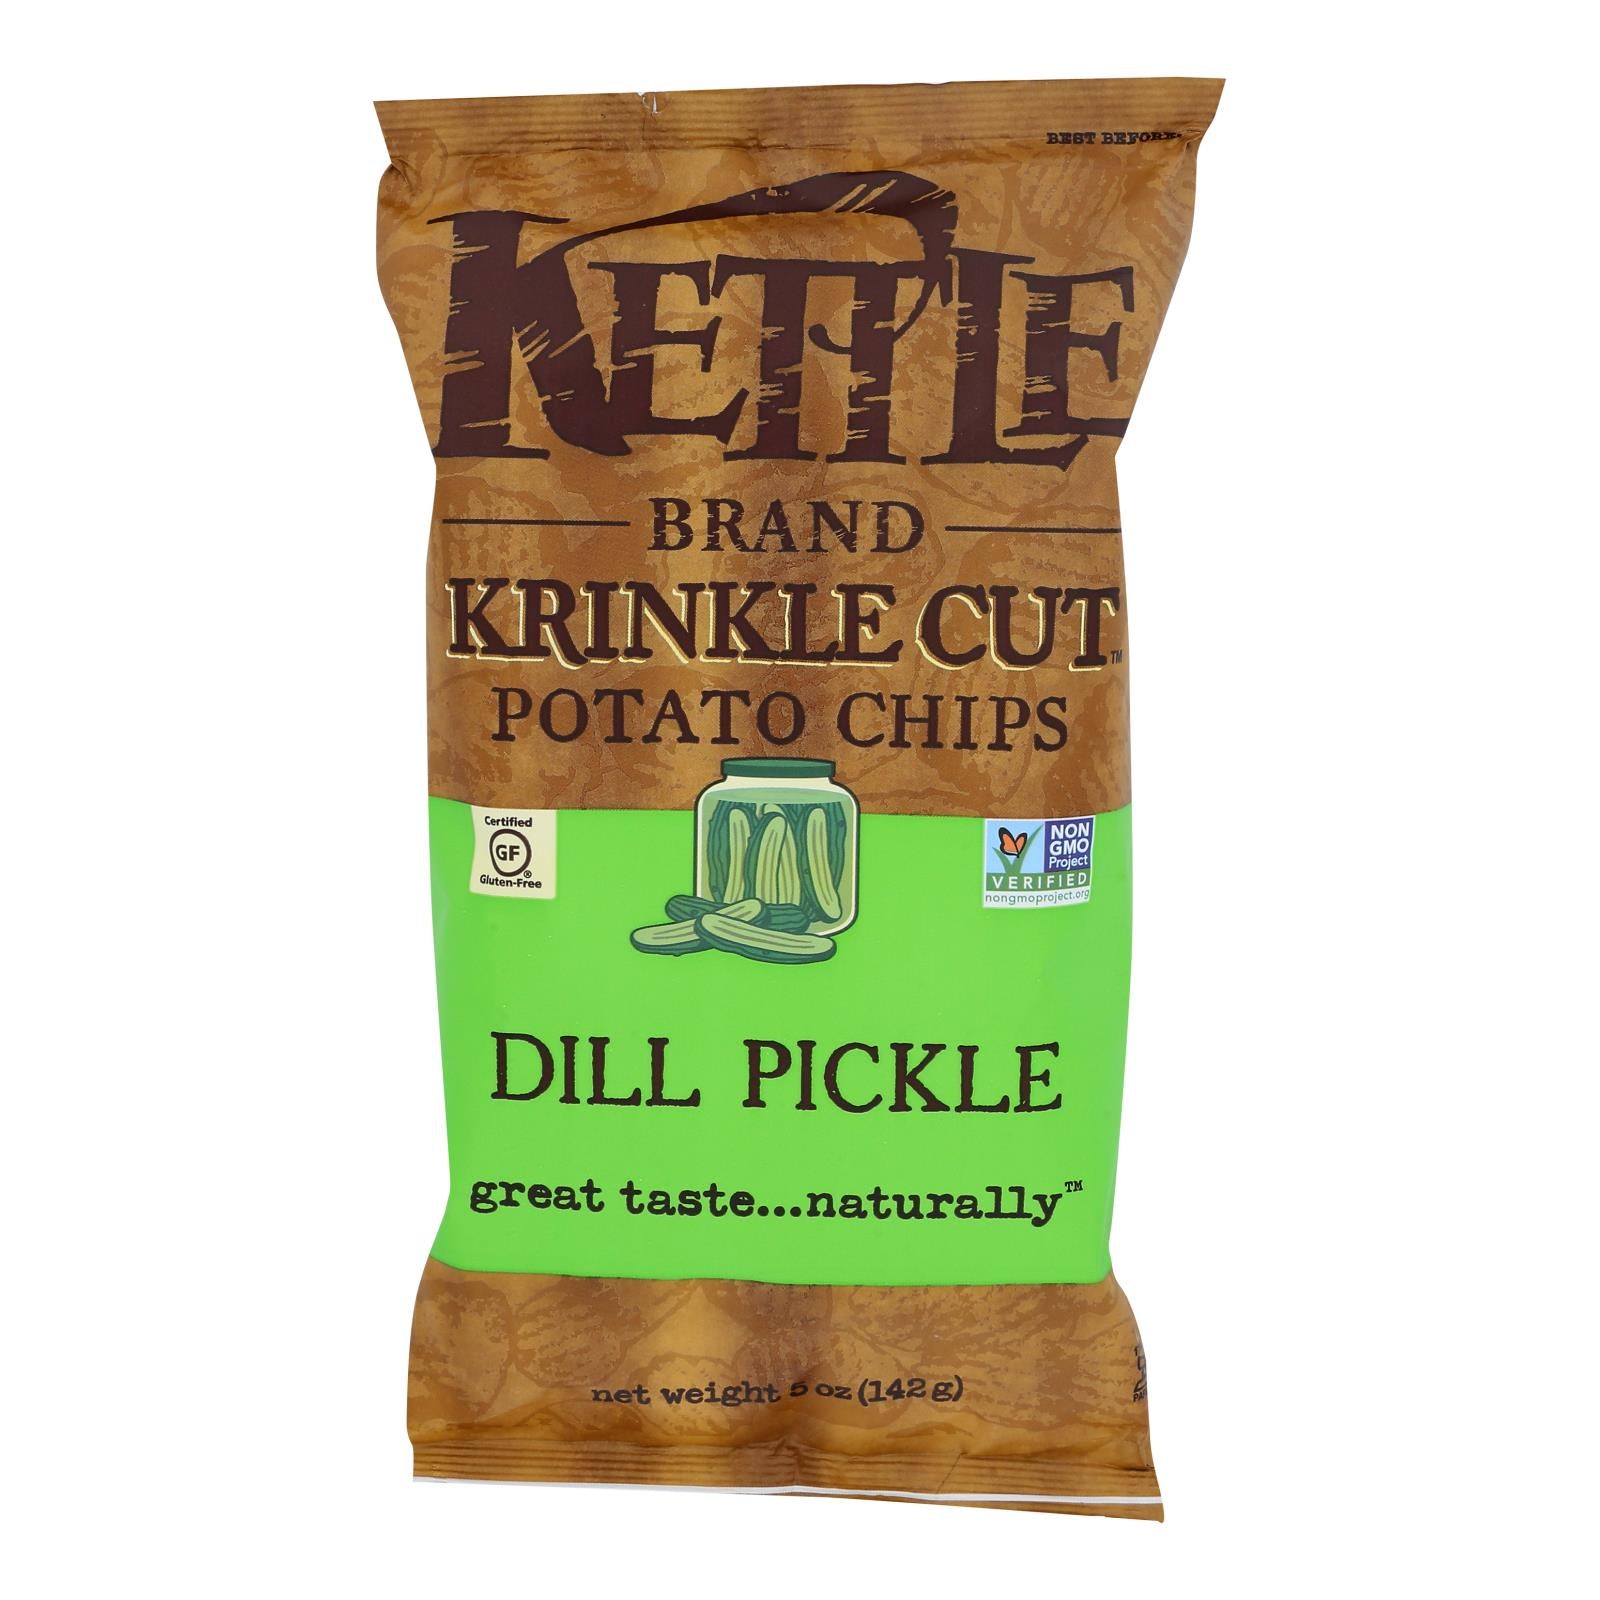 Kettle Brand Krinkle Cut Potato Chips - Dill Pickle - Case Of 15 - 5 Oz.